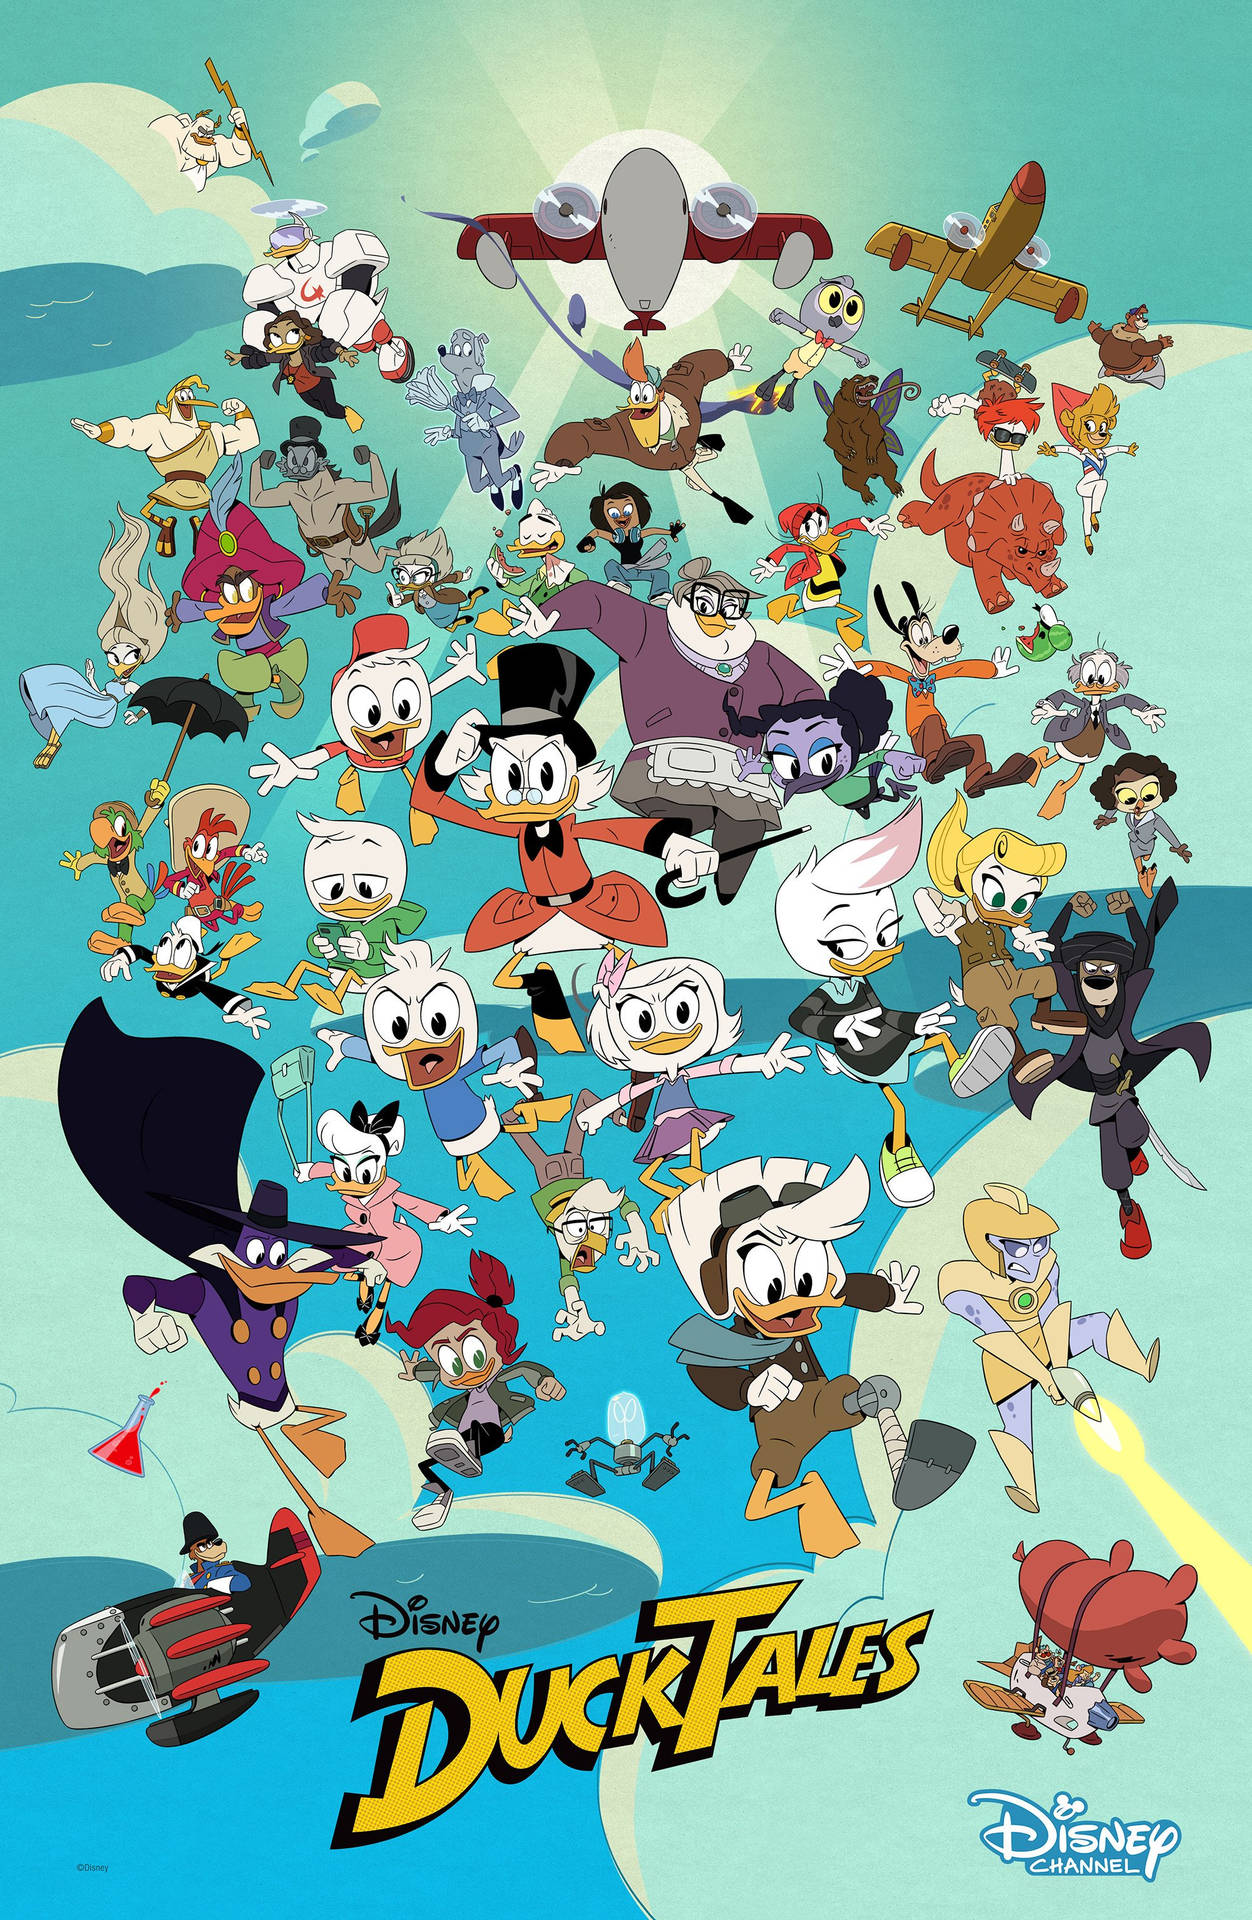 Free Ducktales Wallpaper Downloads, [100+] Ducktales Wallpapers for FREE |  